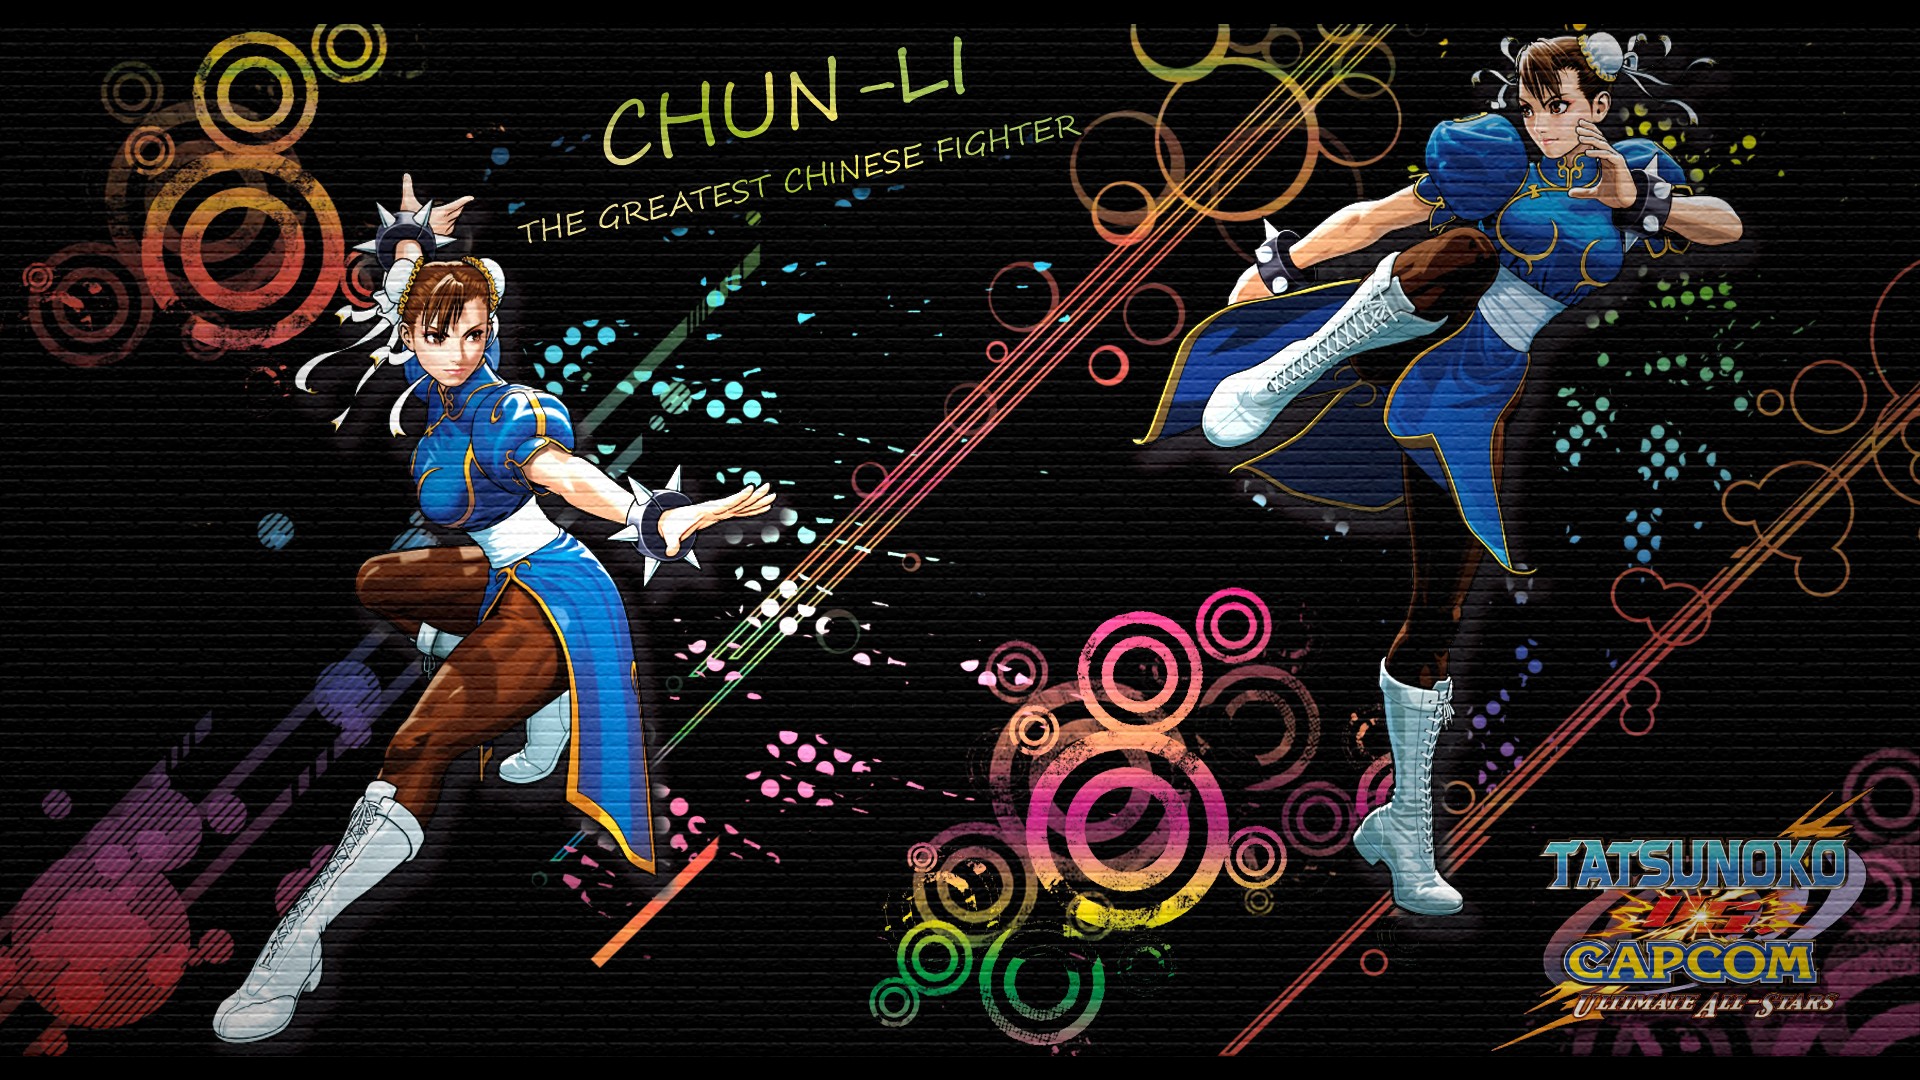 General 1920x1080 Street Fighter video games Chun-Li video game warriors video game girls women Capcom Ultimate Alliance